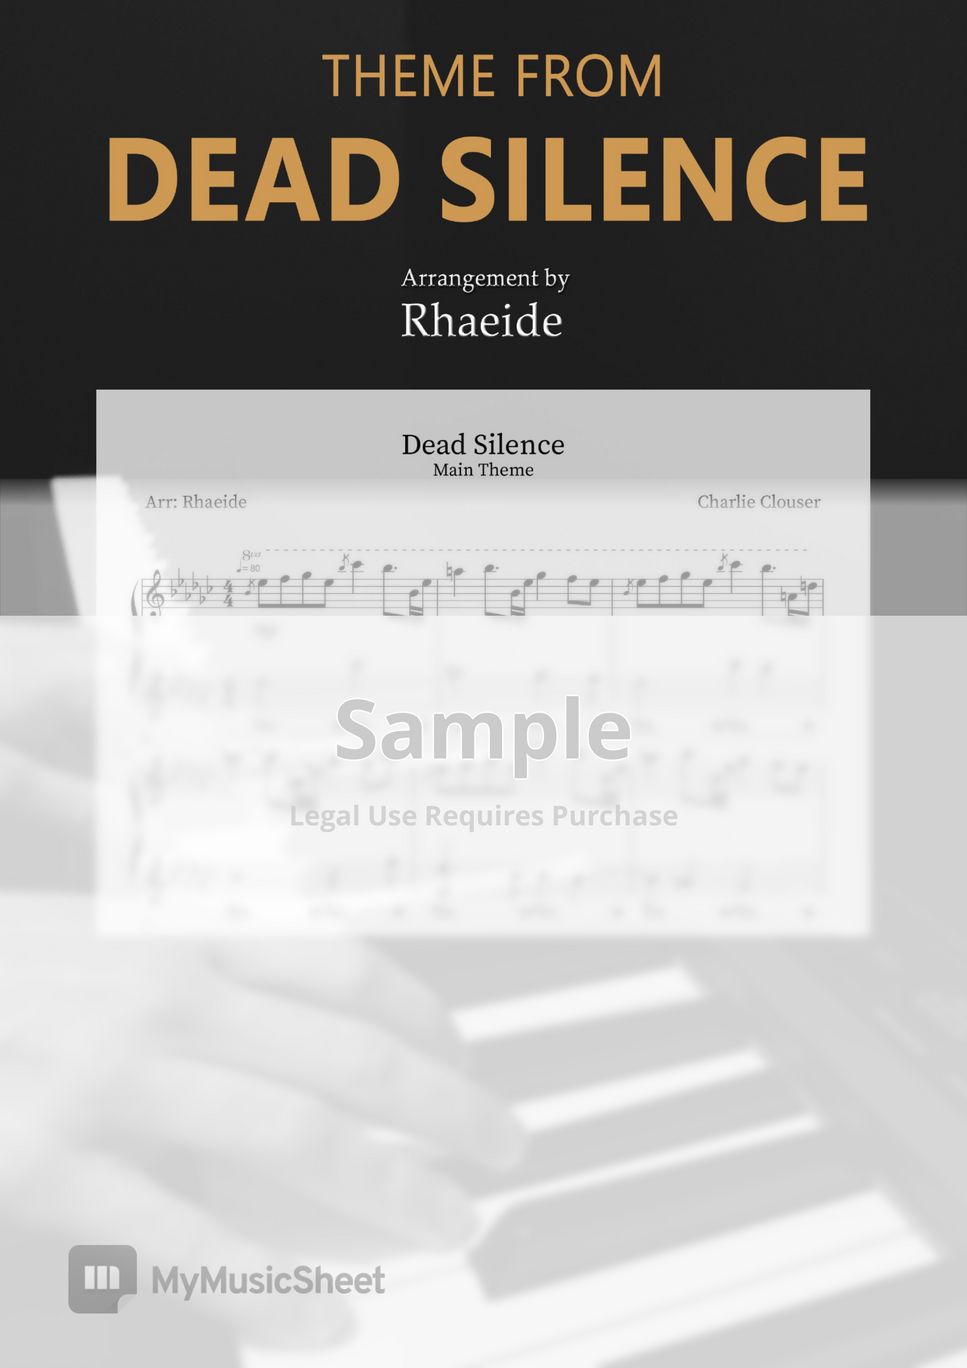 Dead Silence - Main Theme (Charlie Clouser) by Rhaeide